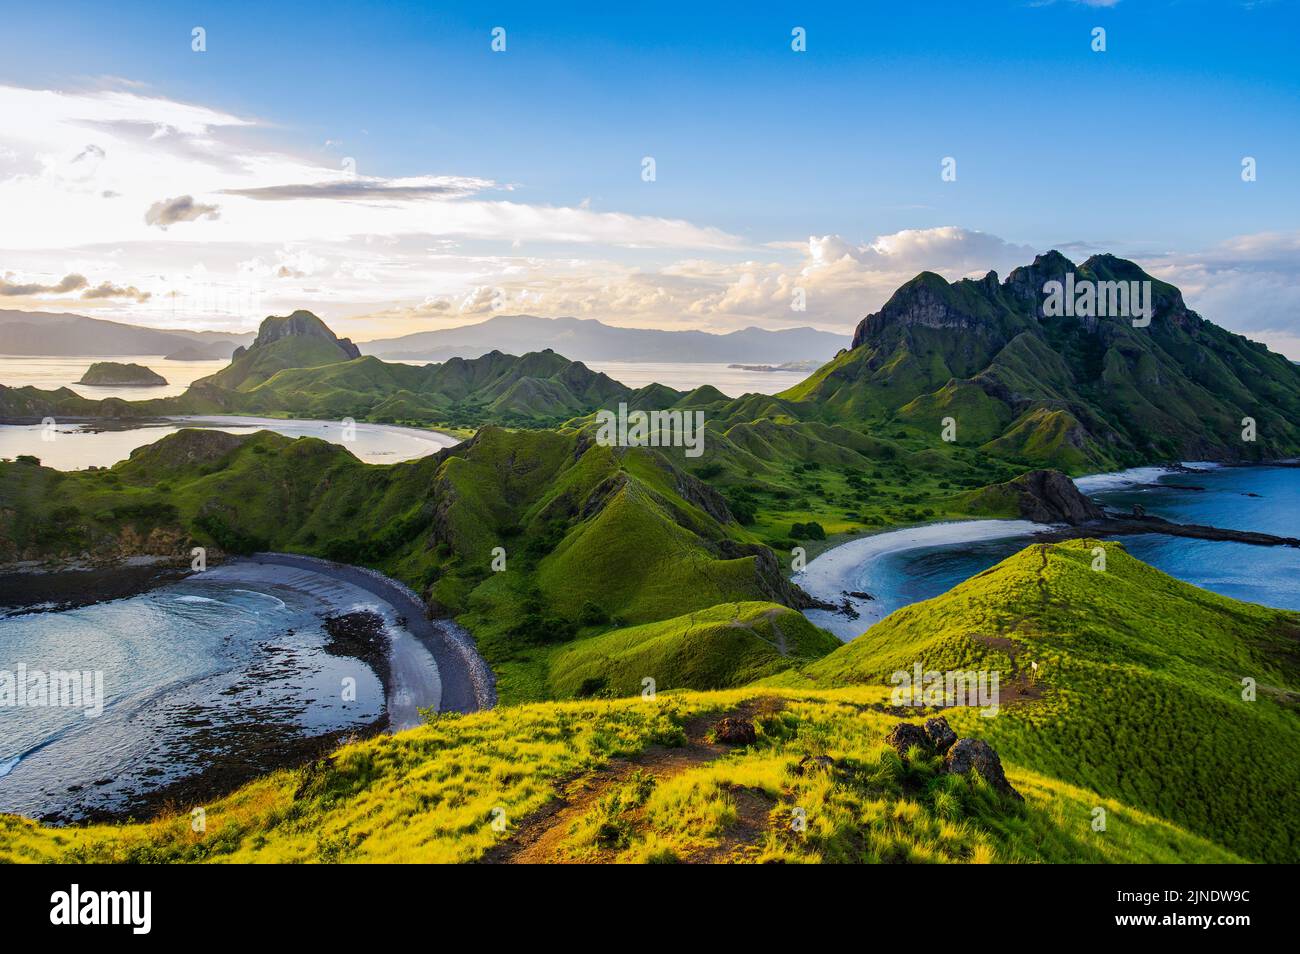 A beautiful high-angle view of the Gambar Pemandangan Alam mountains in Indonesia Stock Photo